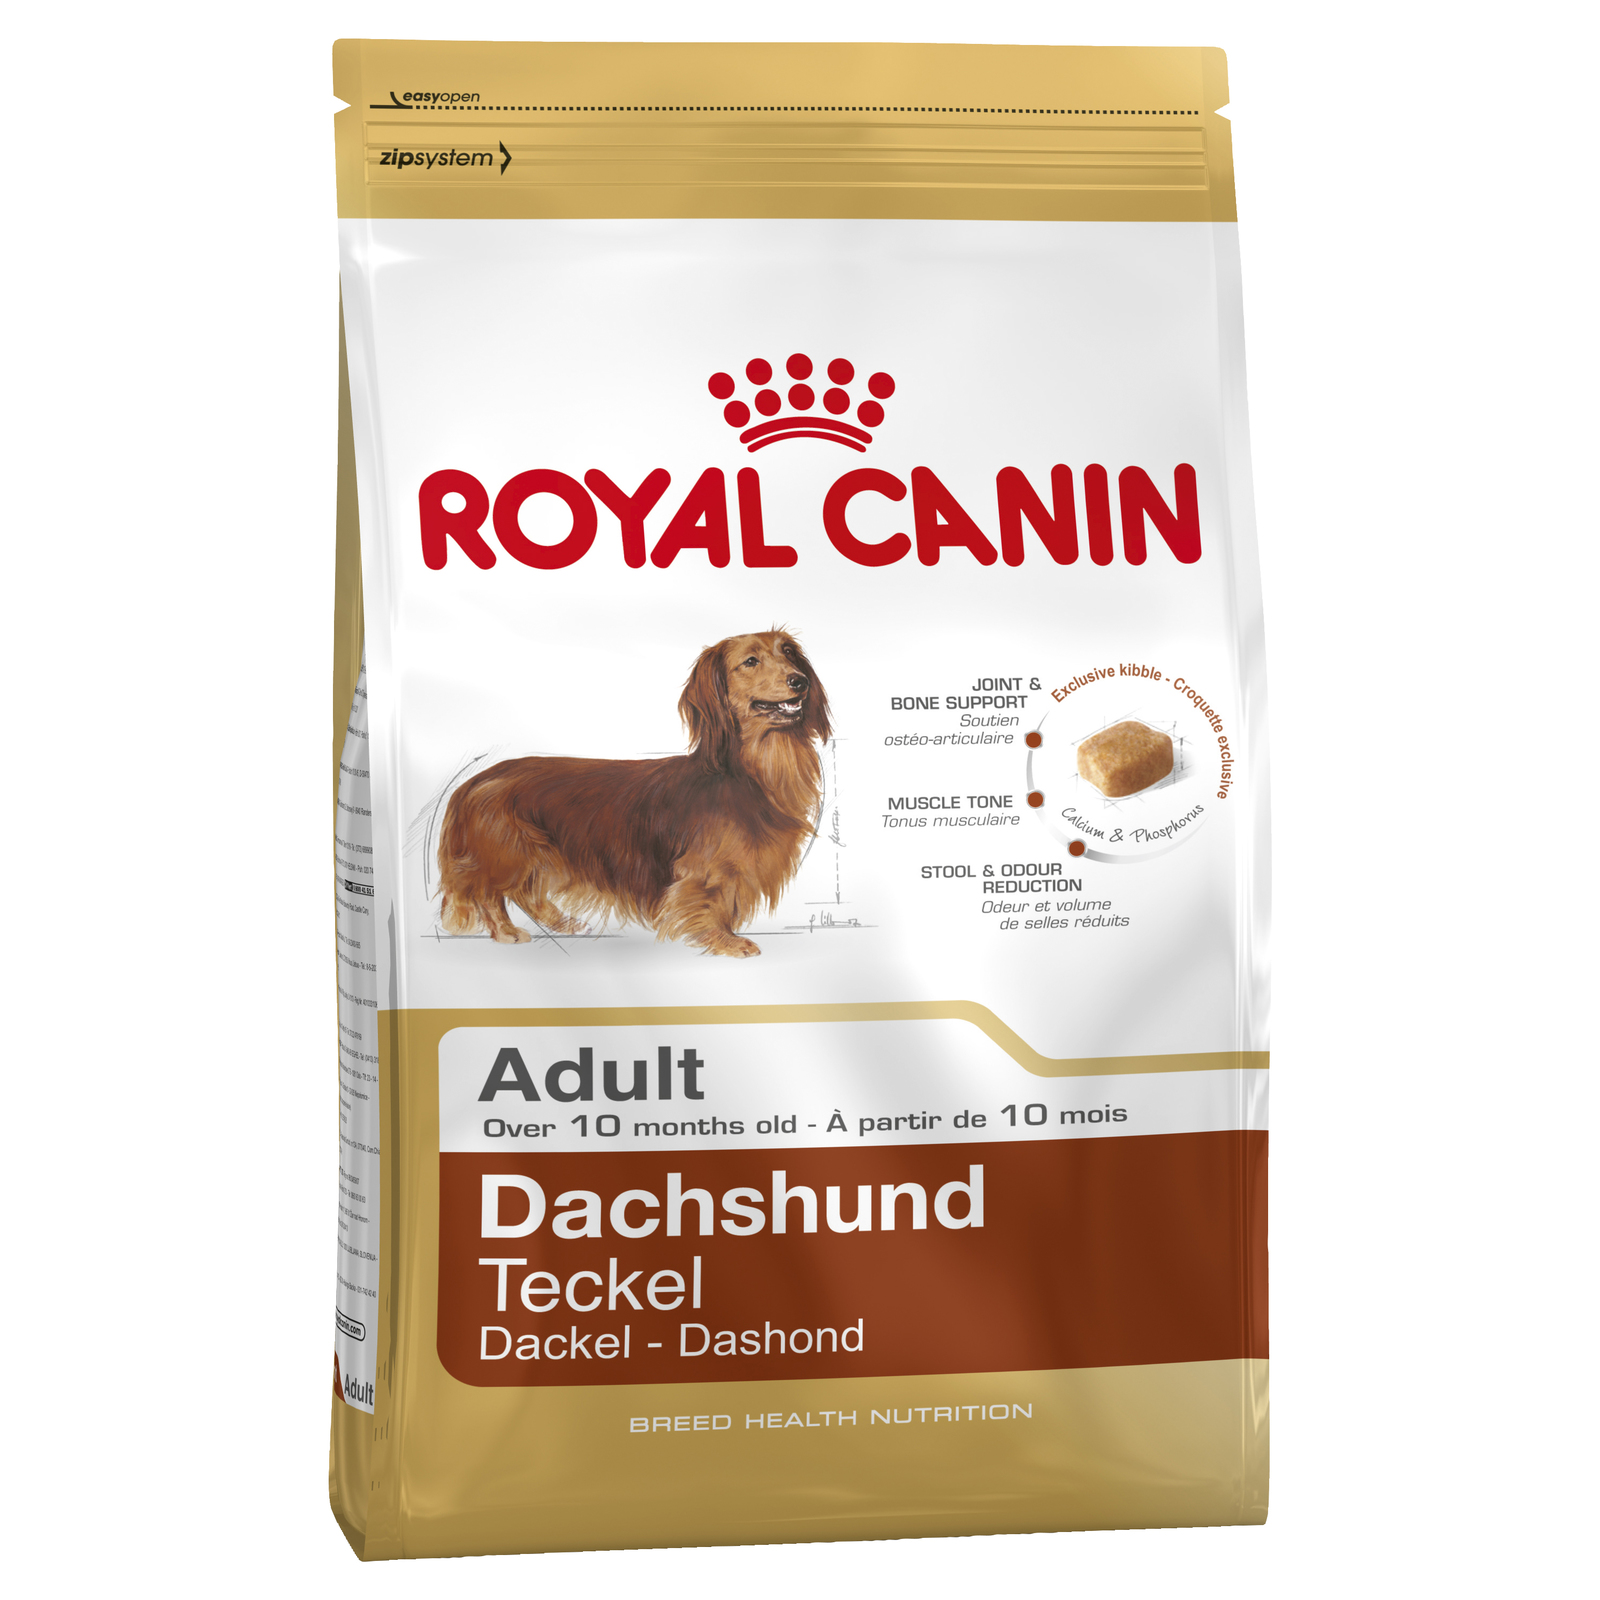 royal-canin-dog-food-online-royal-canin-dachshund-adult-dog-food